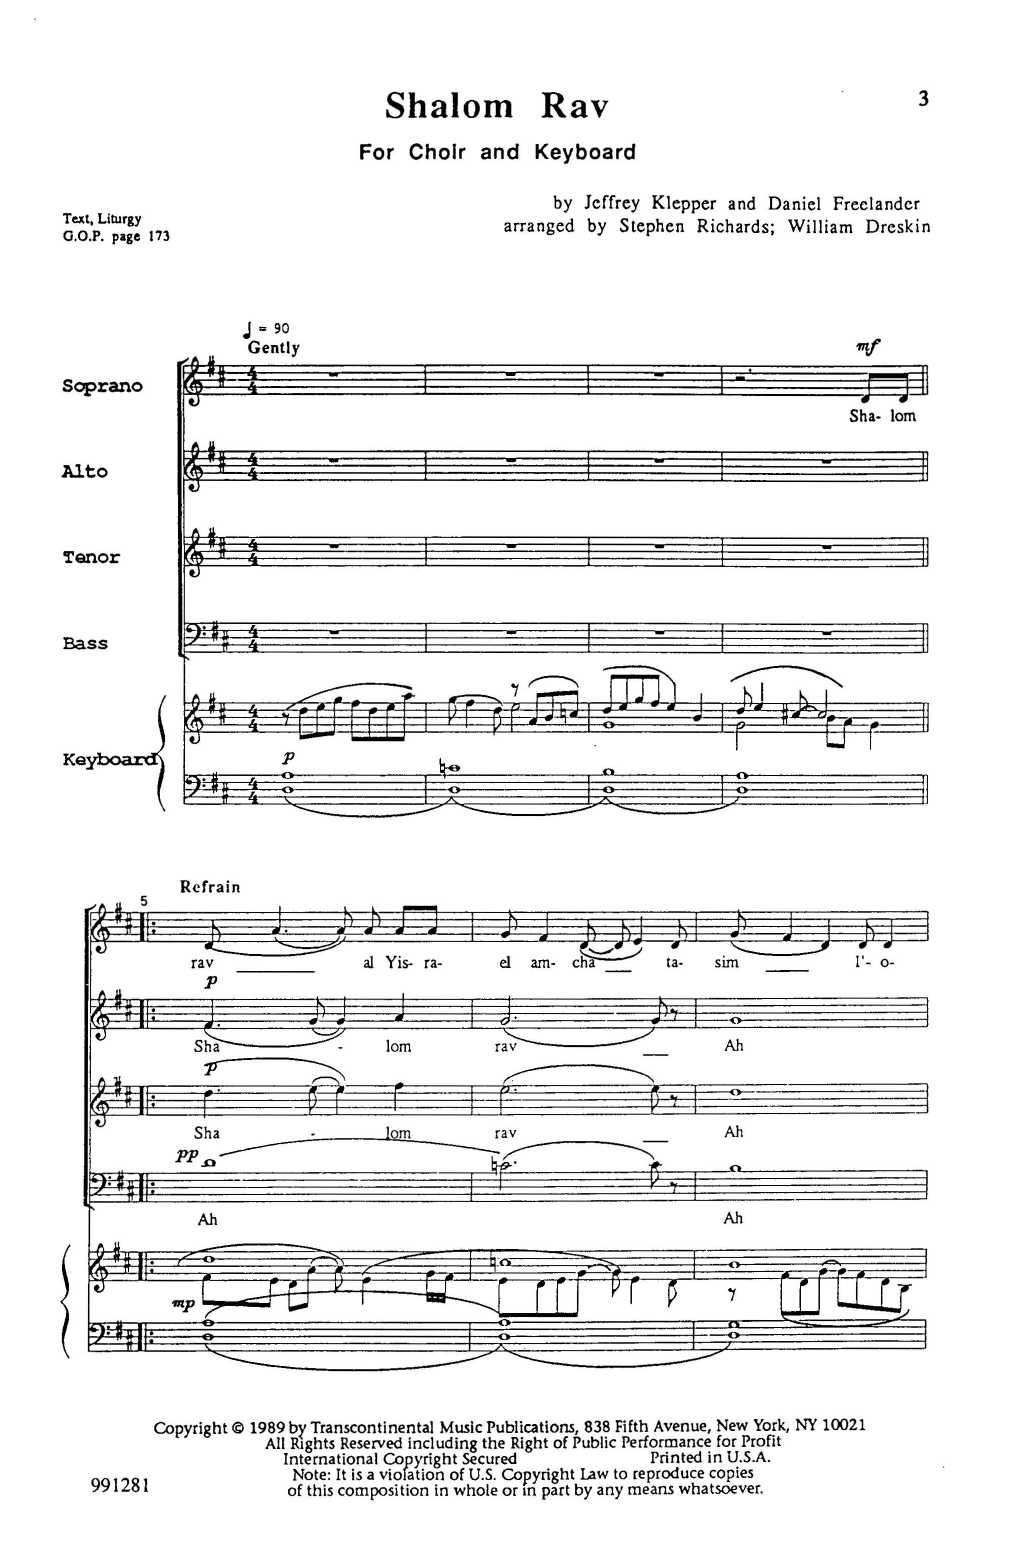 Download Jeffrey Klepper and Daniel Freelander Shalom Rav (arr. Stephen Richards and William Dreskin) Sheet Music and learn how to play SATB Choir PDF digital score in minutes